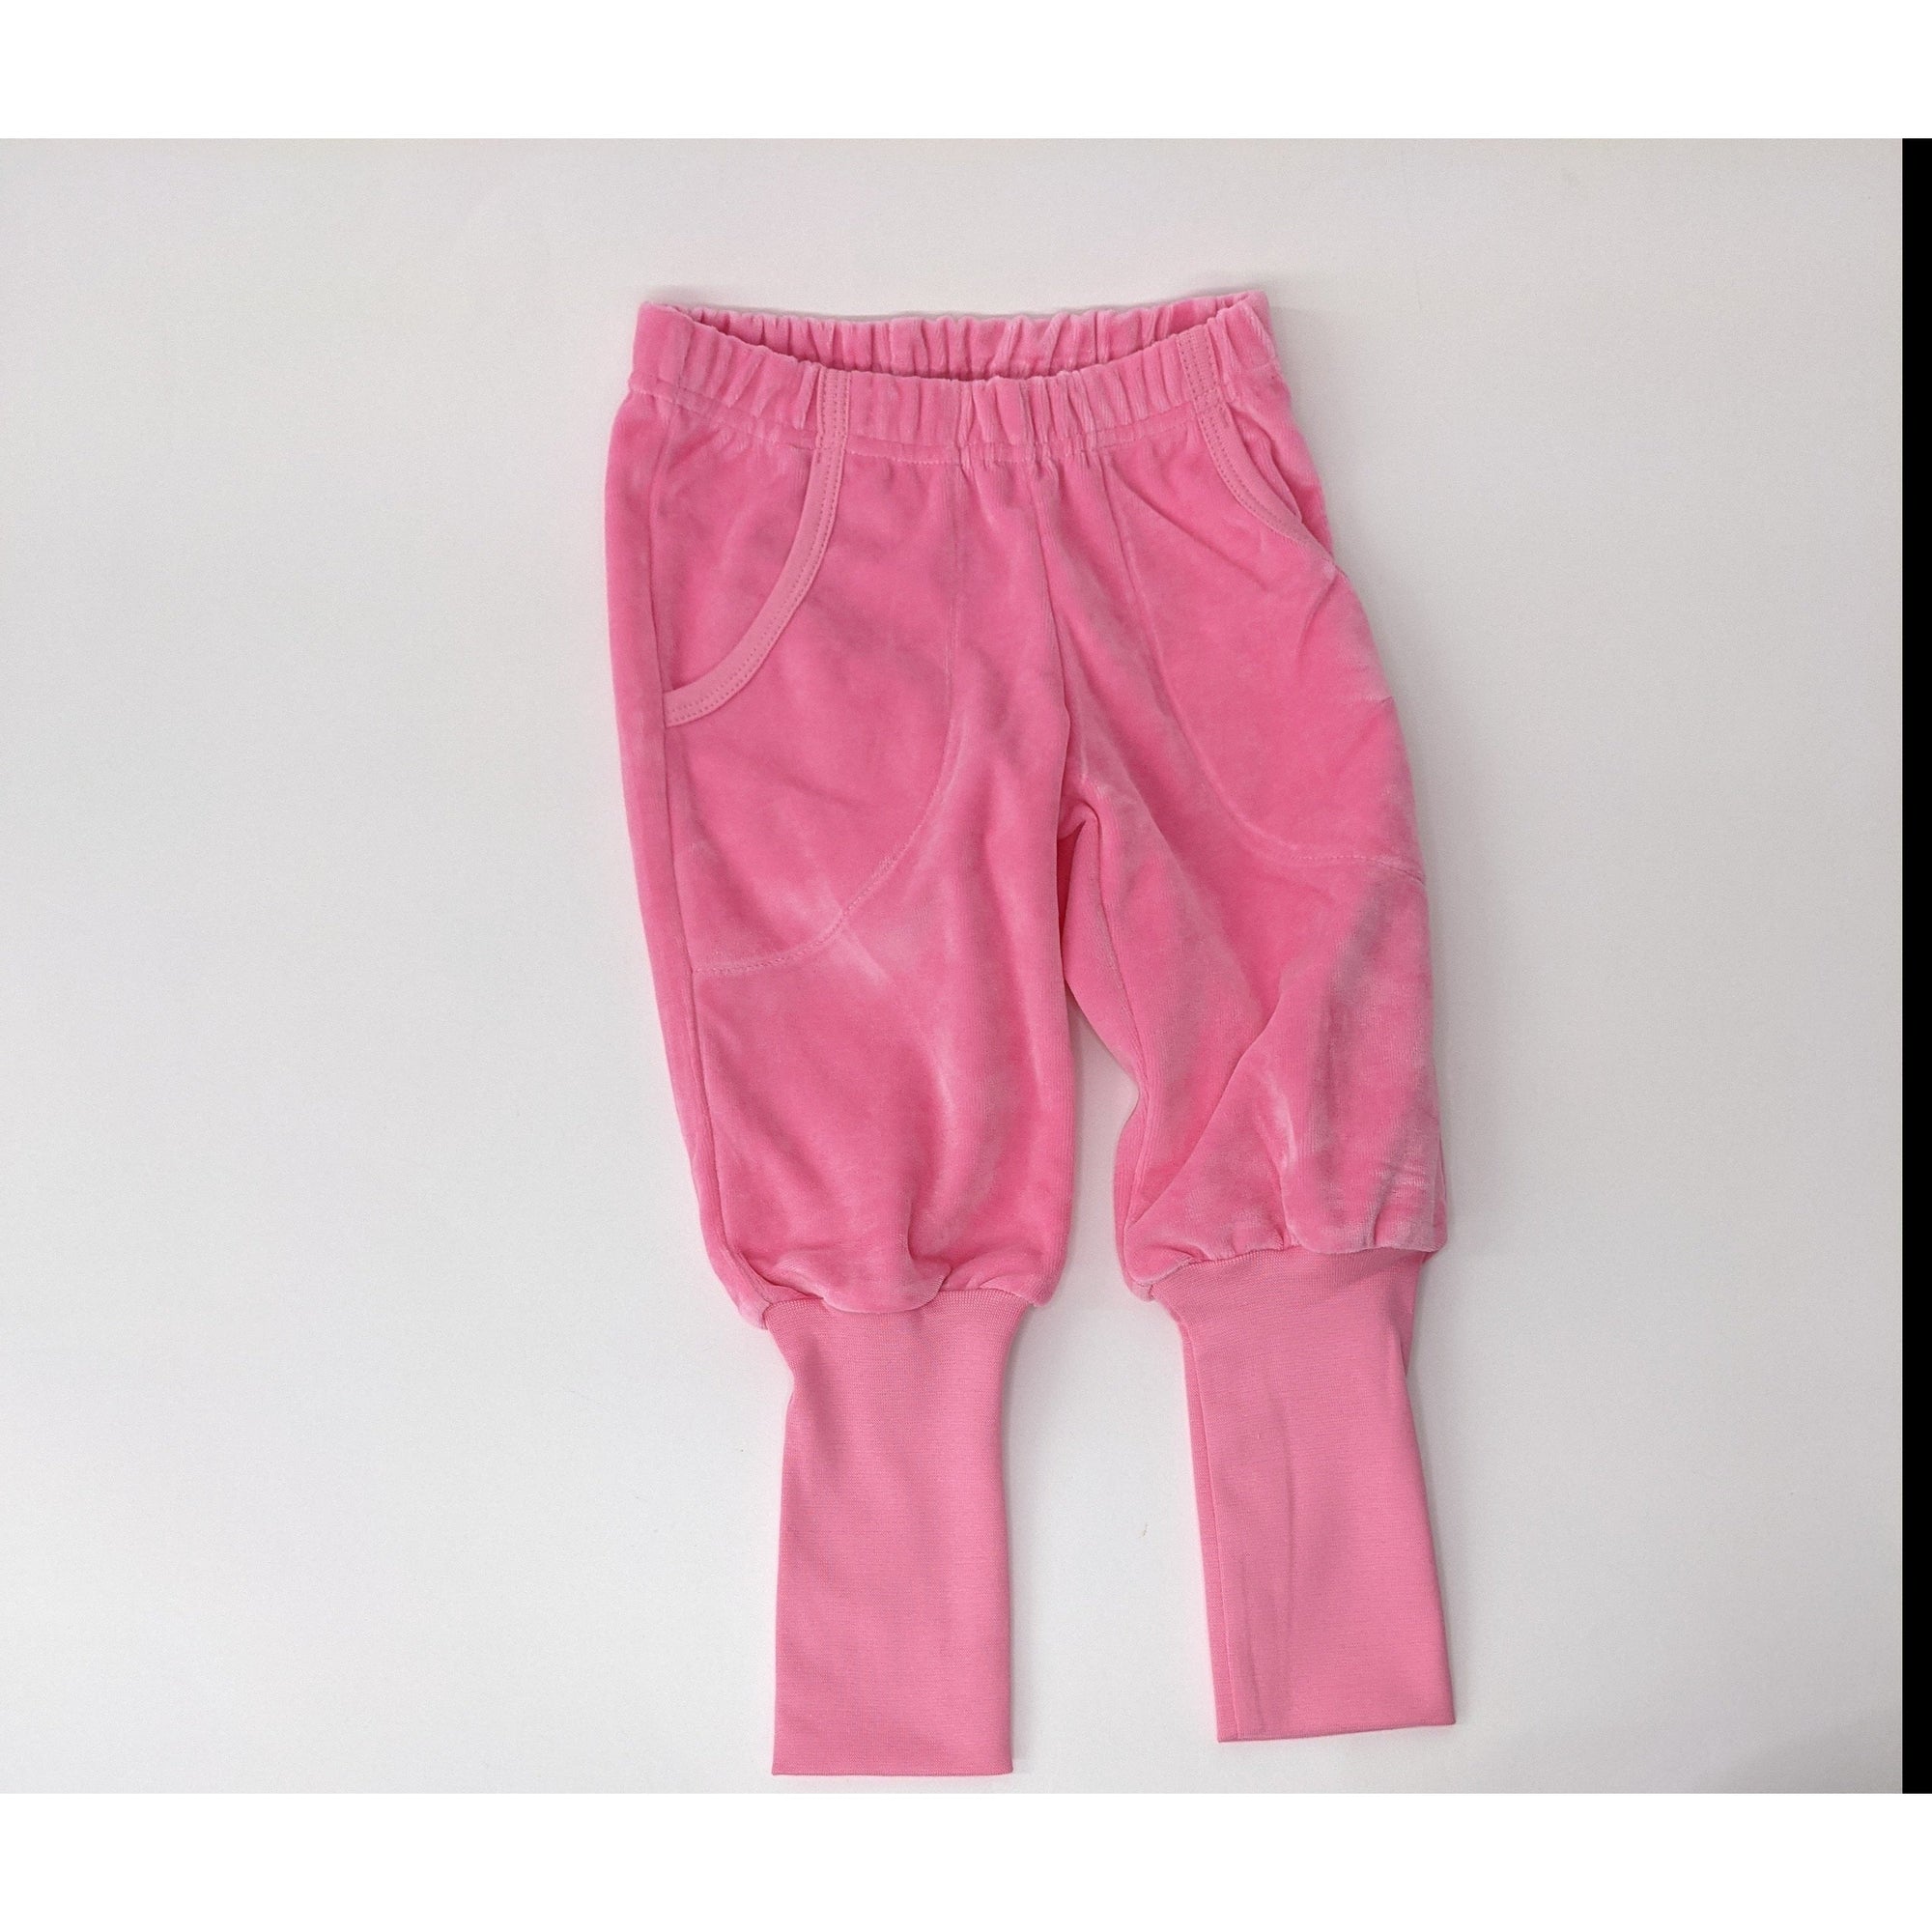 Pink Velour Pants - 1 Left Size 8-10 years-Naperonuttu-Modern Rascals